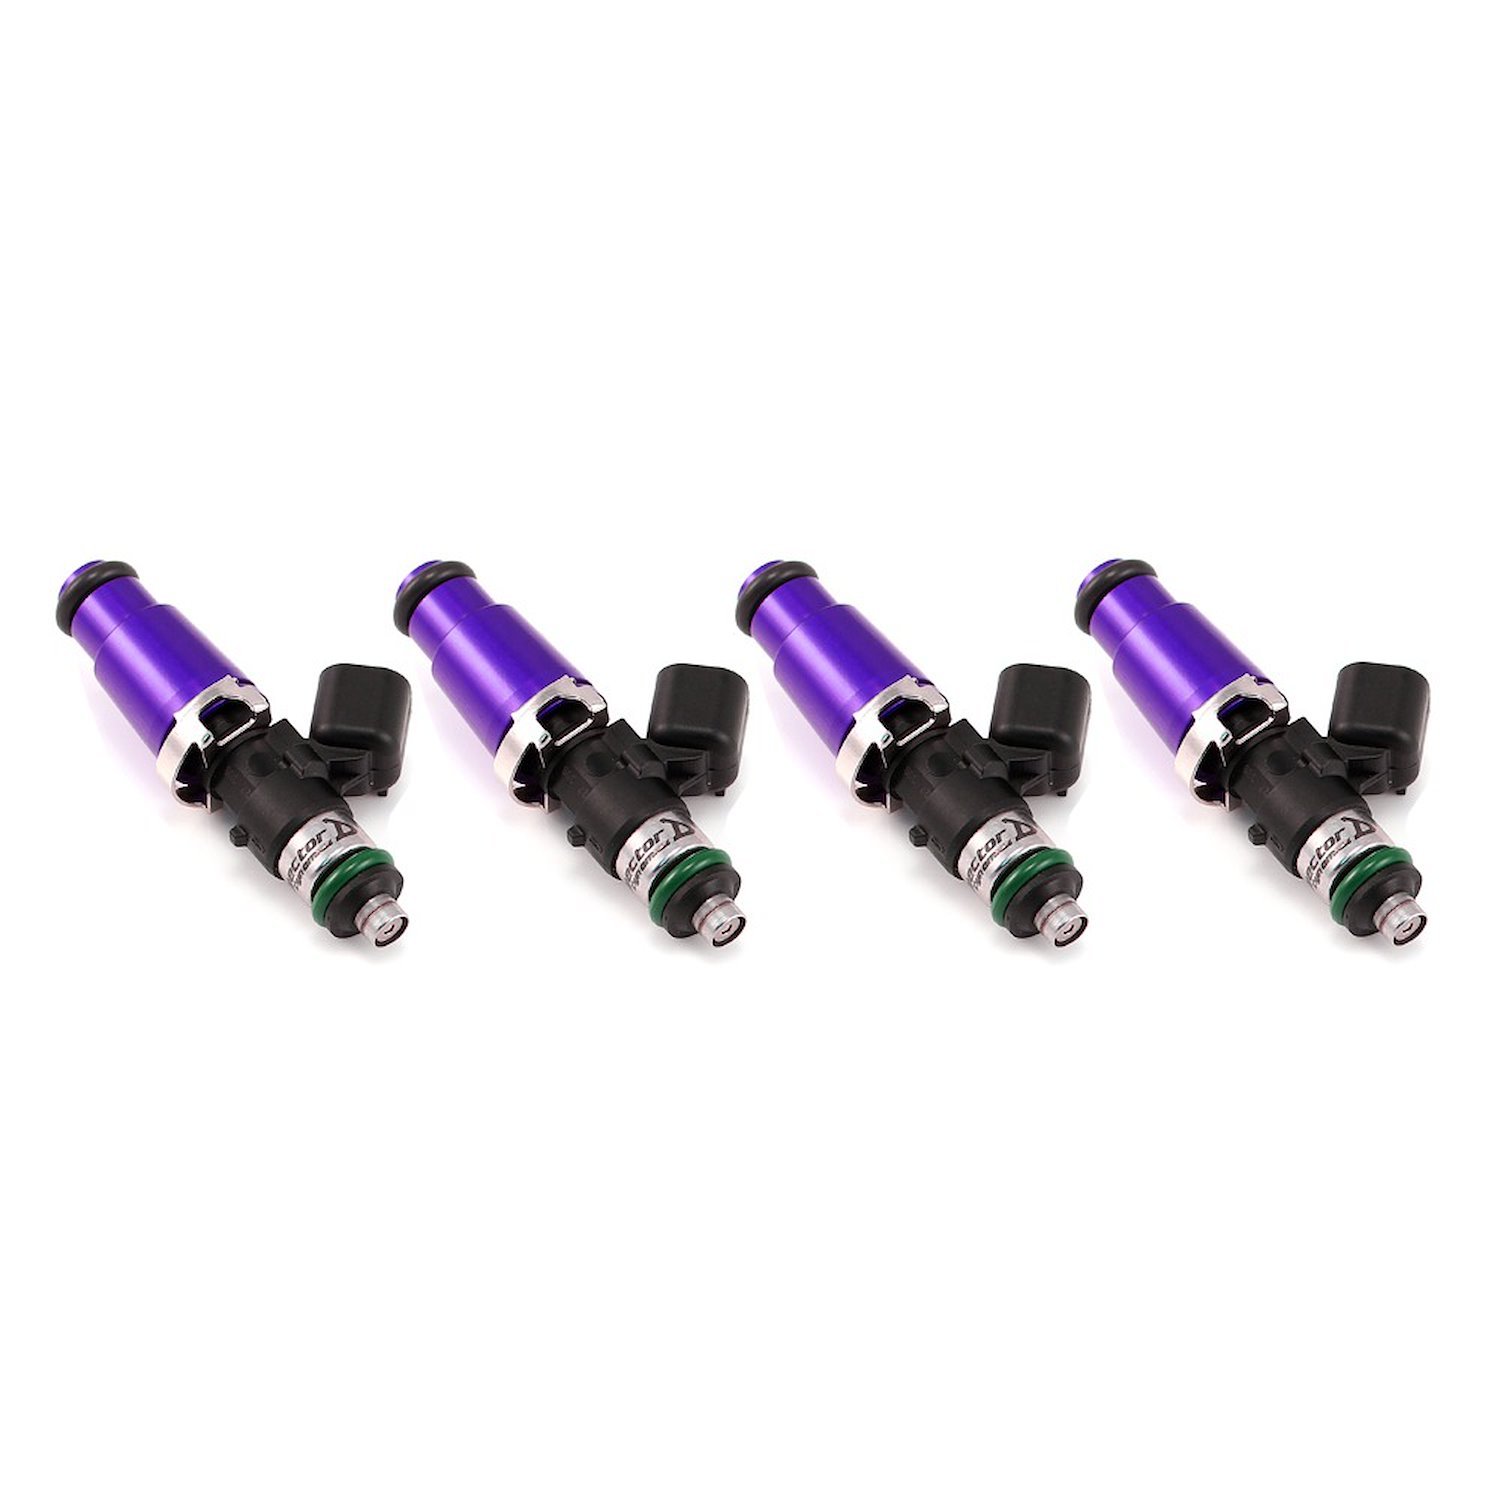 1050.60.14.14.4 1050cc Fuel Injector Set, 14 mm (Purple) Top